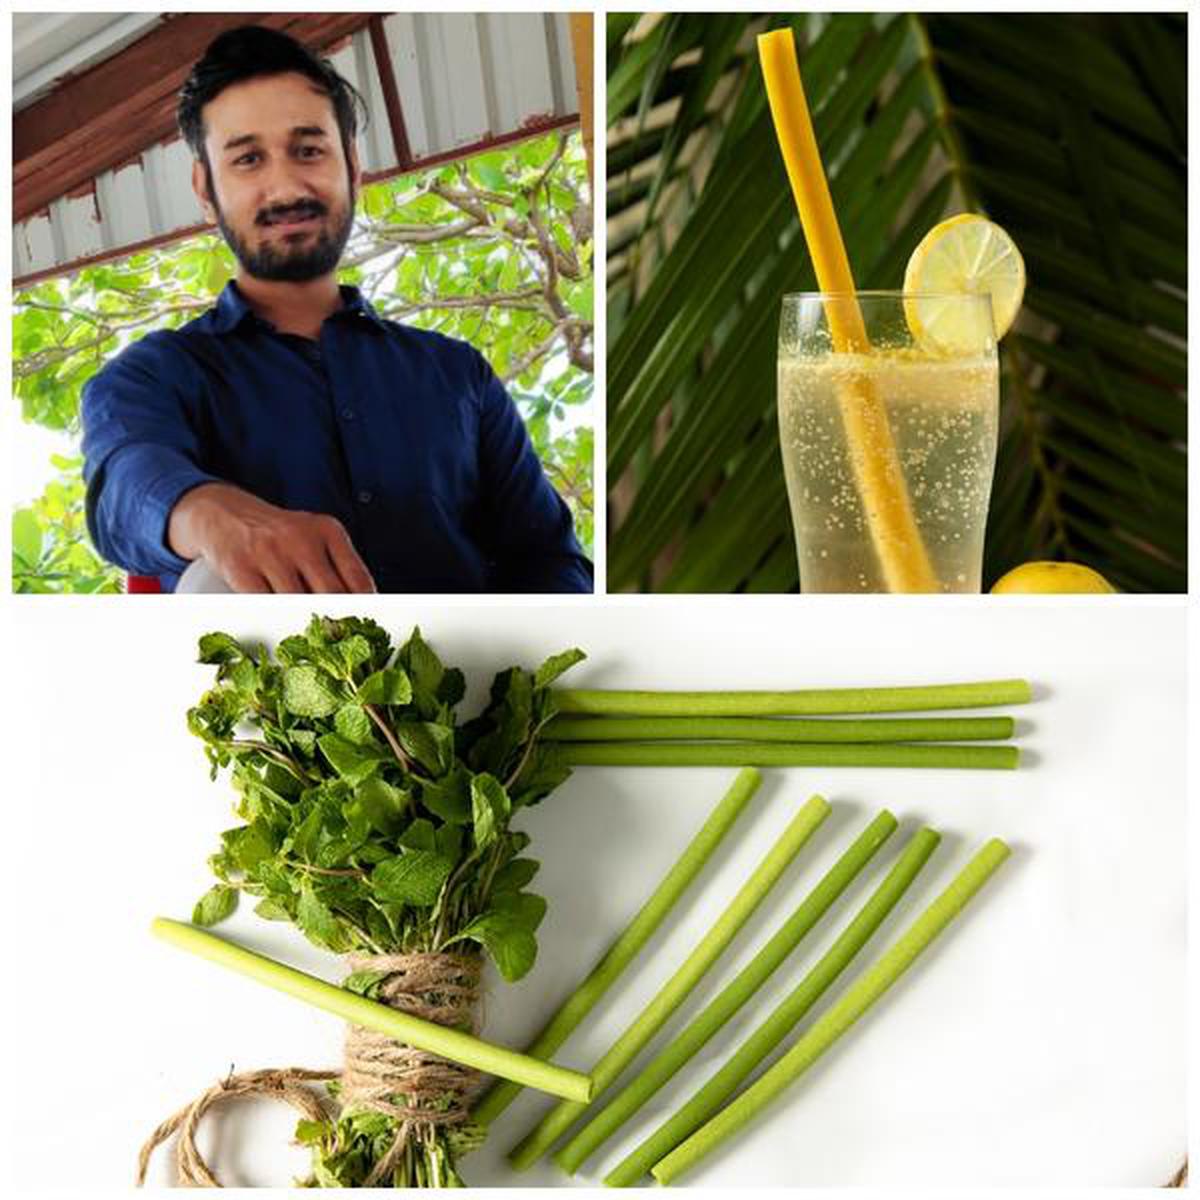 (clockwise from left) Shashank Gupta and snapshots of the edible straws